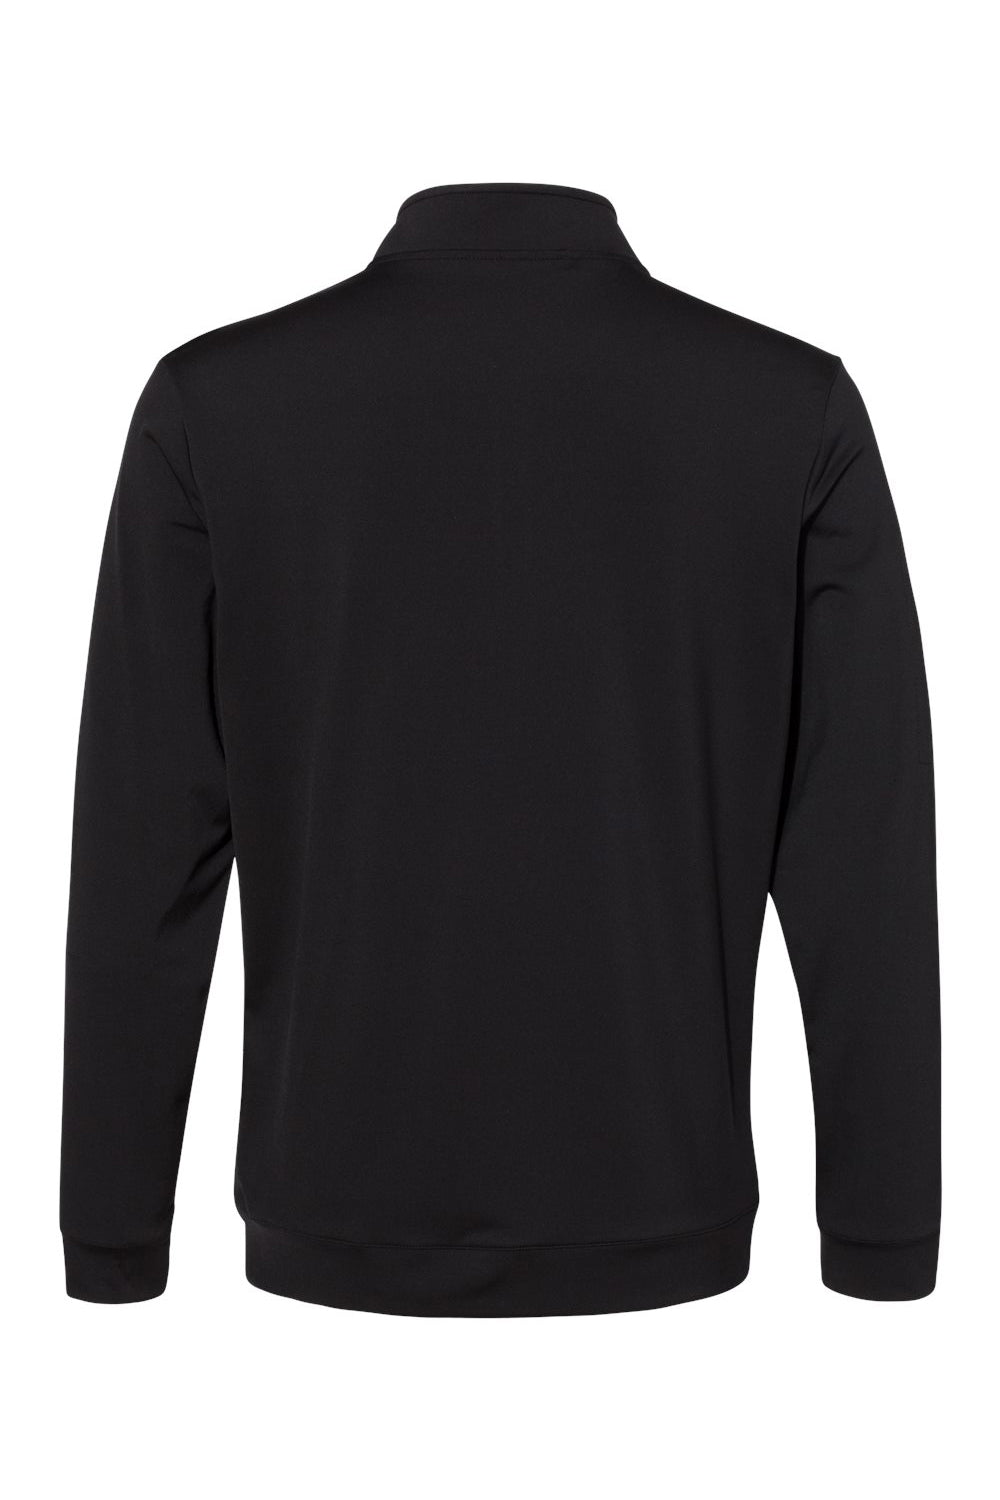 Adidas A295 Mens Performance UPF 50+ 1/4 Zip Sweatshirt Black Flat Back